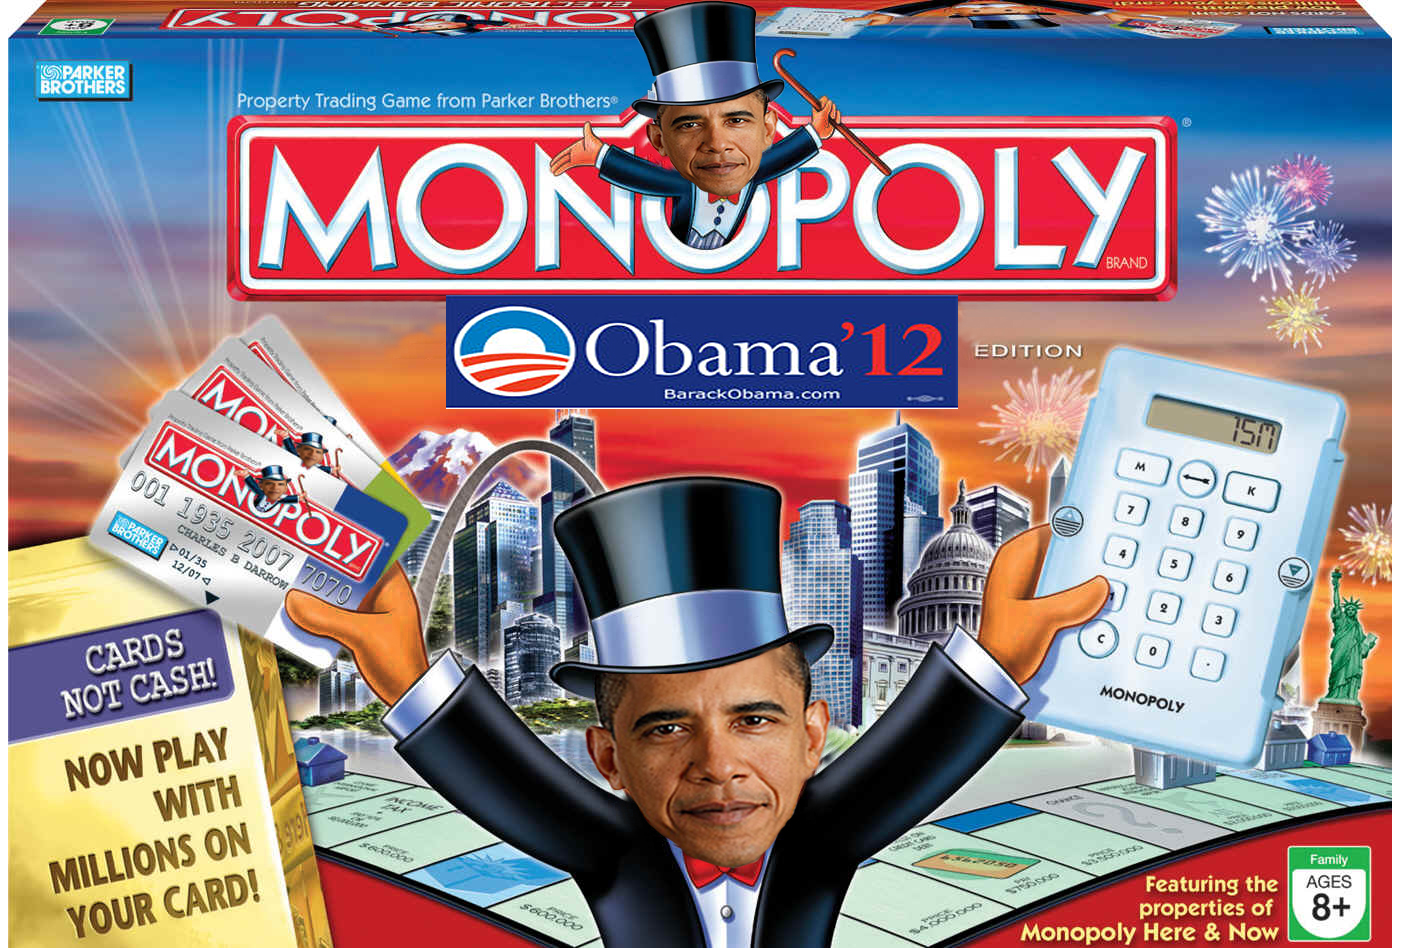 Obama's new Monopoly Board Game